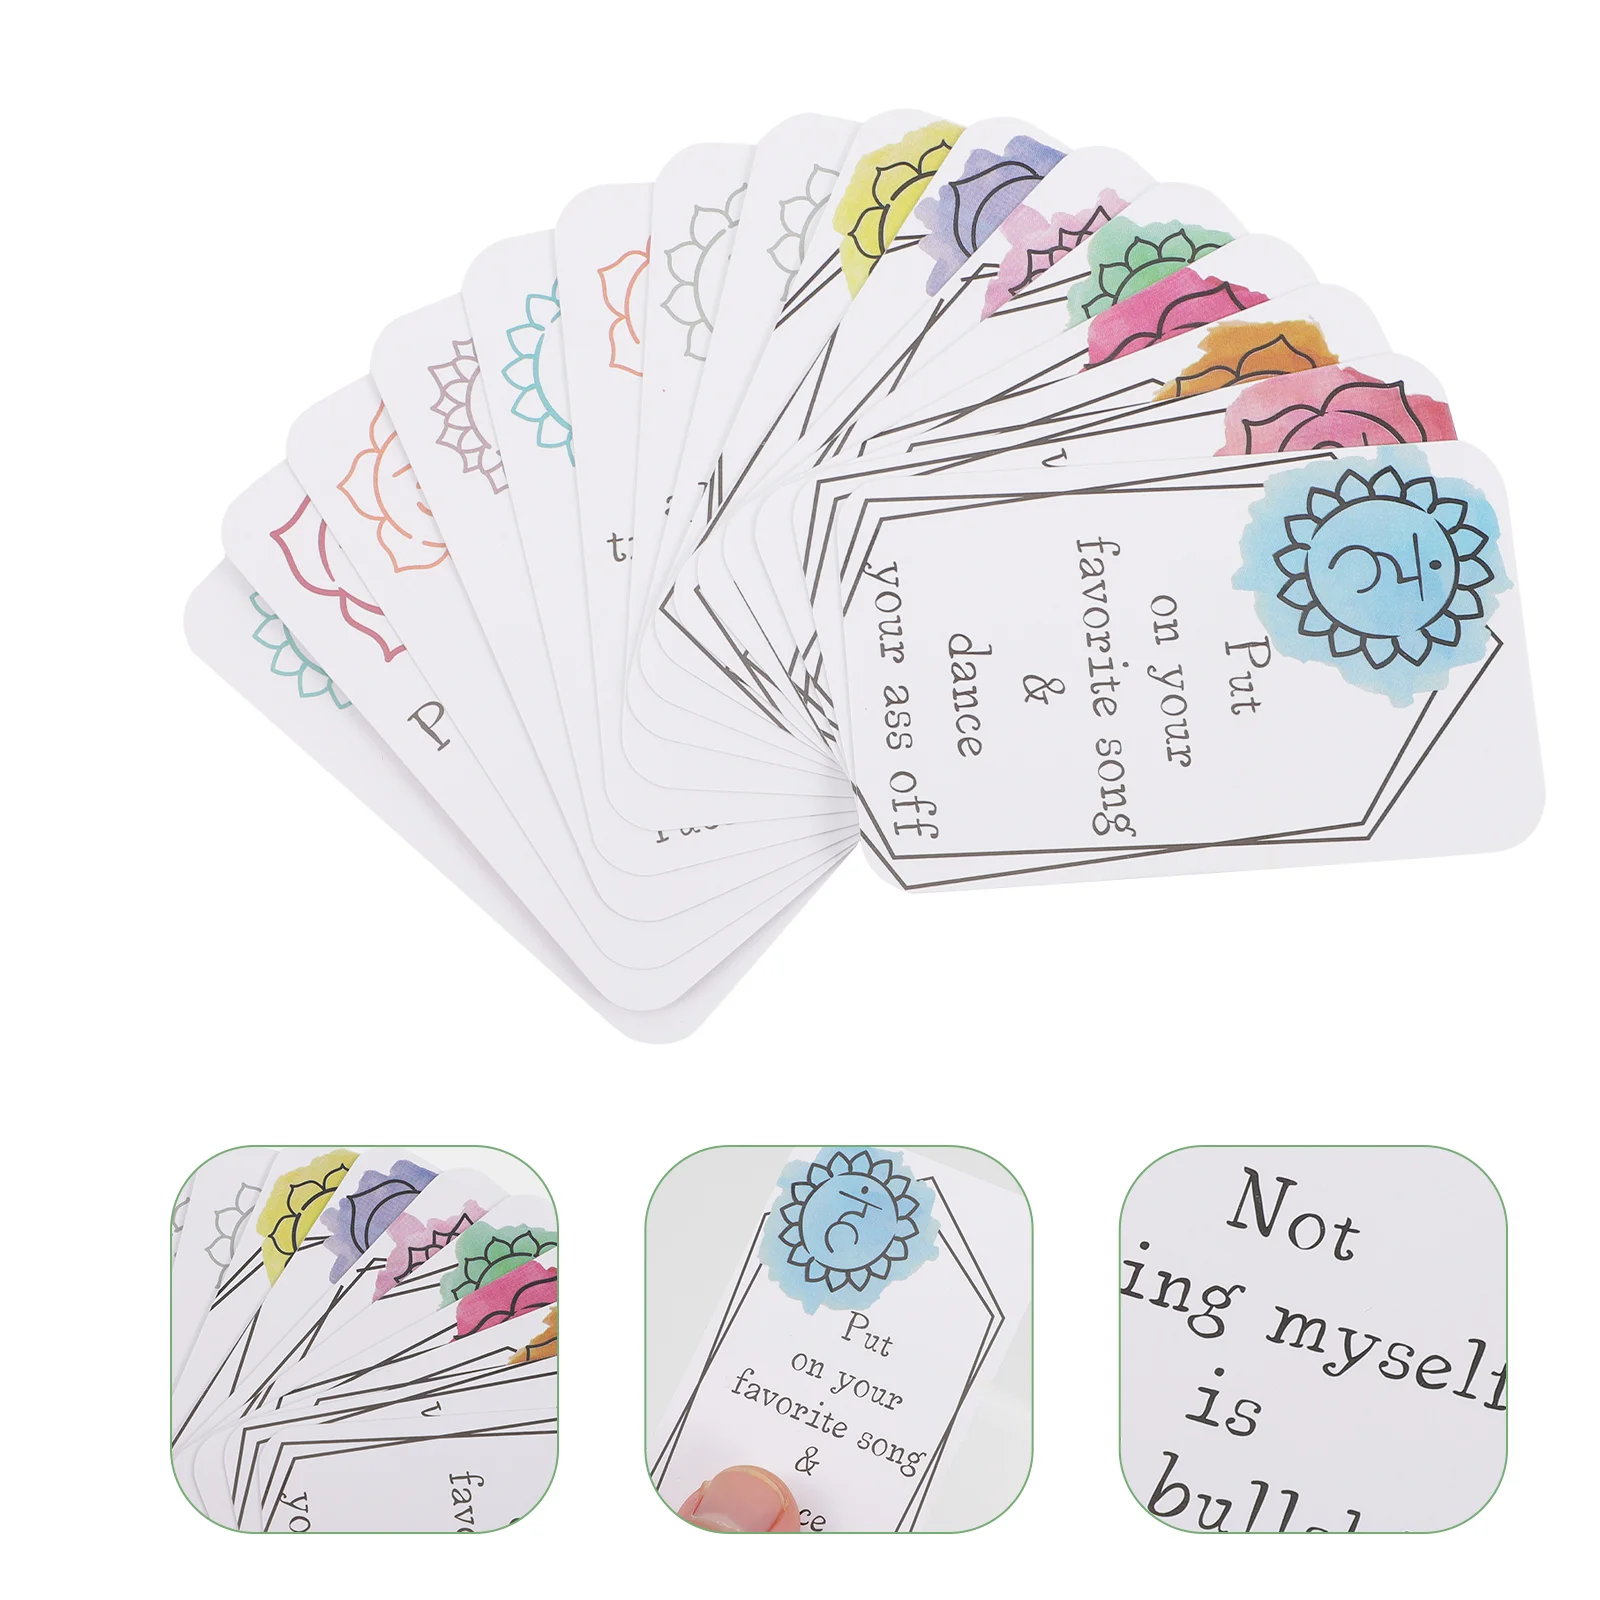 

1 Set of Positive Affirmation Cards Decorative Affirmation Cards Gifts Affirmation Cards